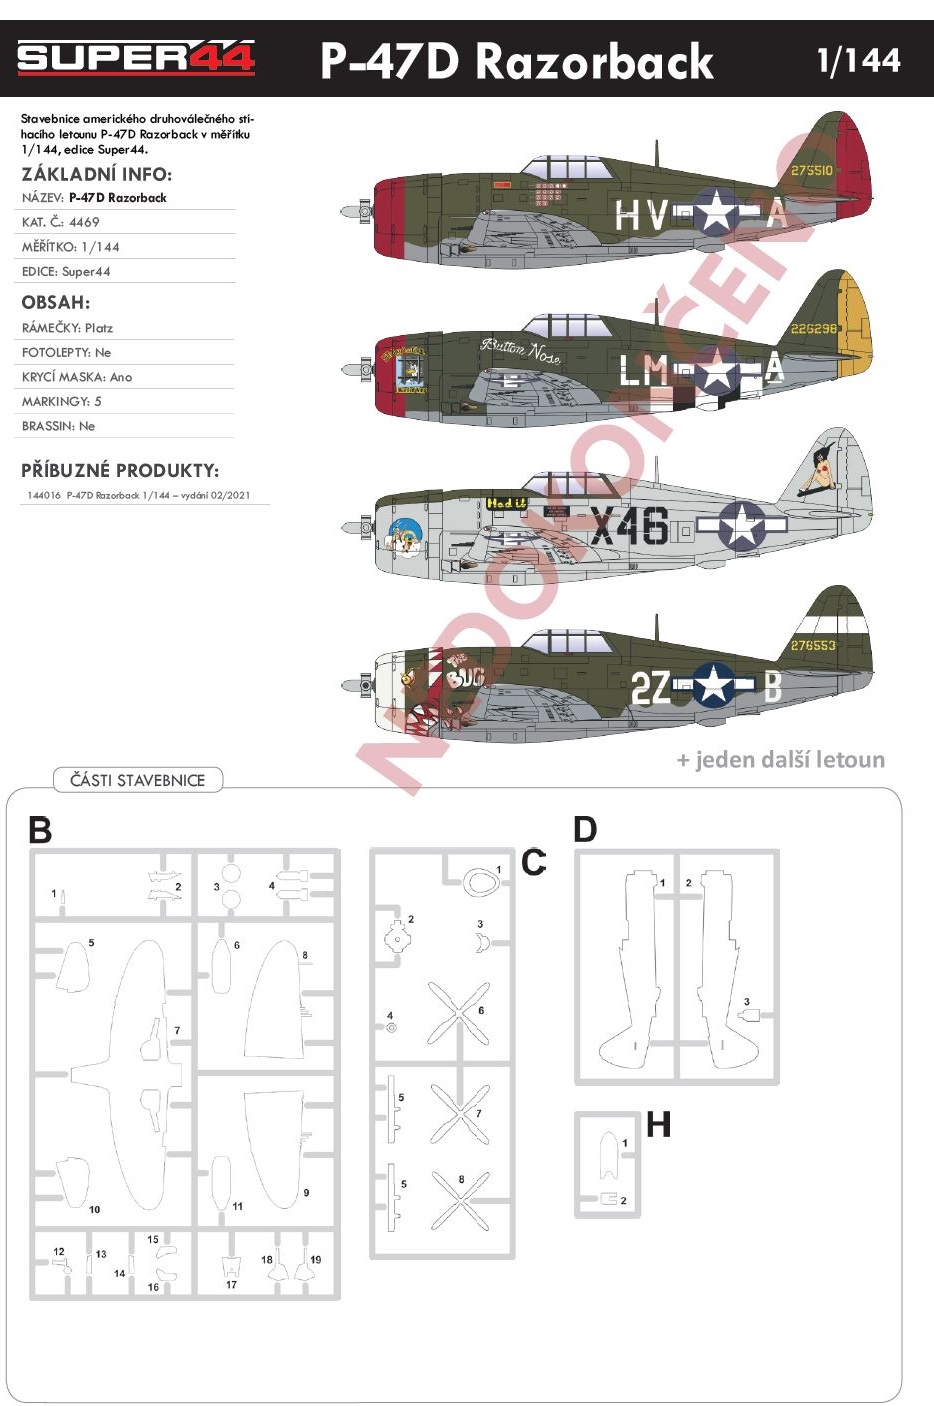 1/144 P-47D Razorback (Super44)